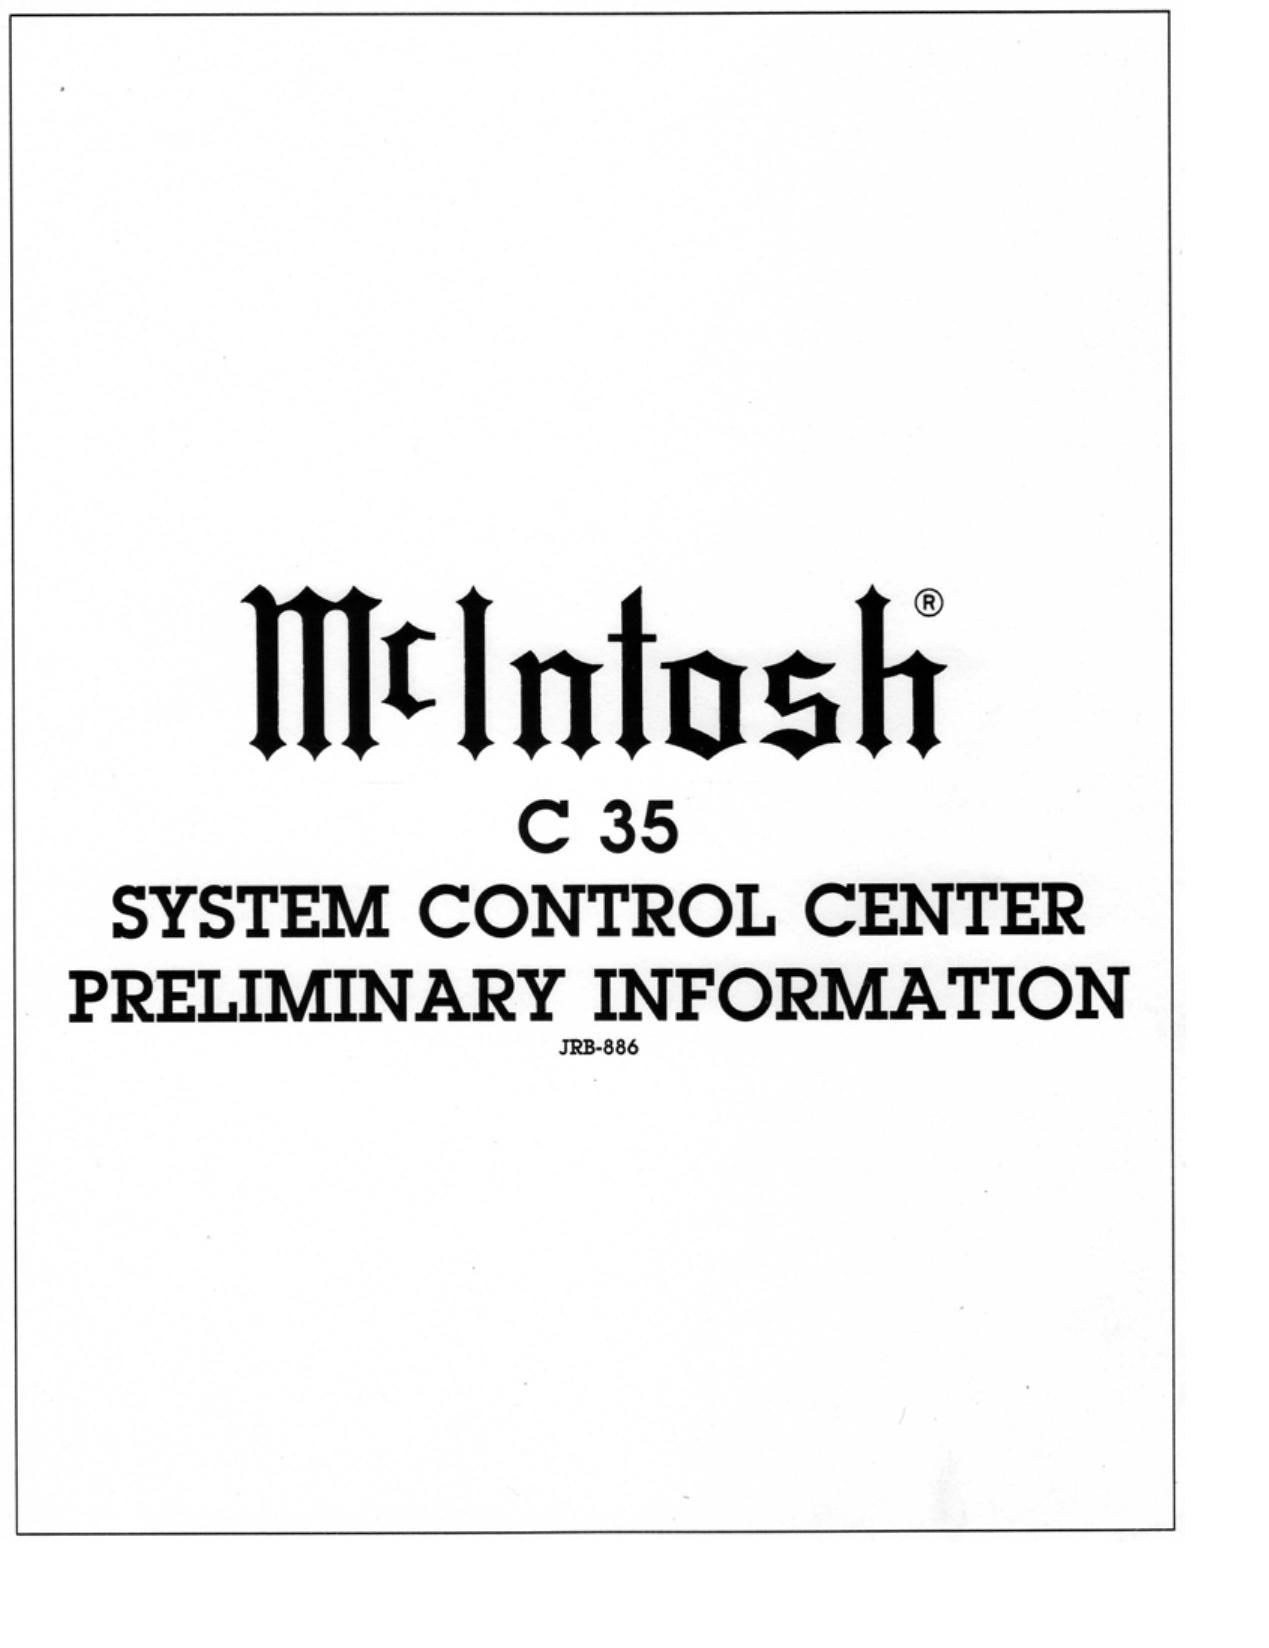 McIntosh C35 Preliminary Information